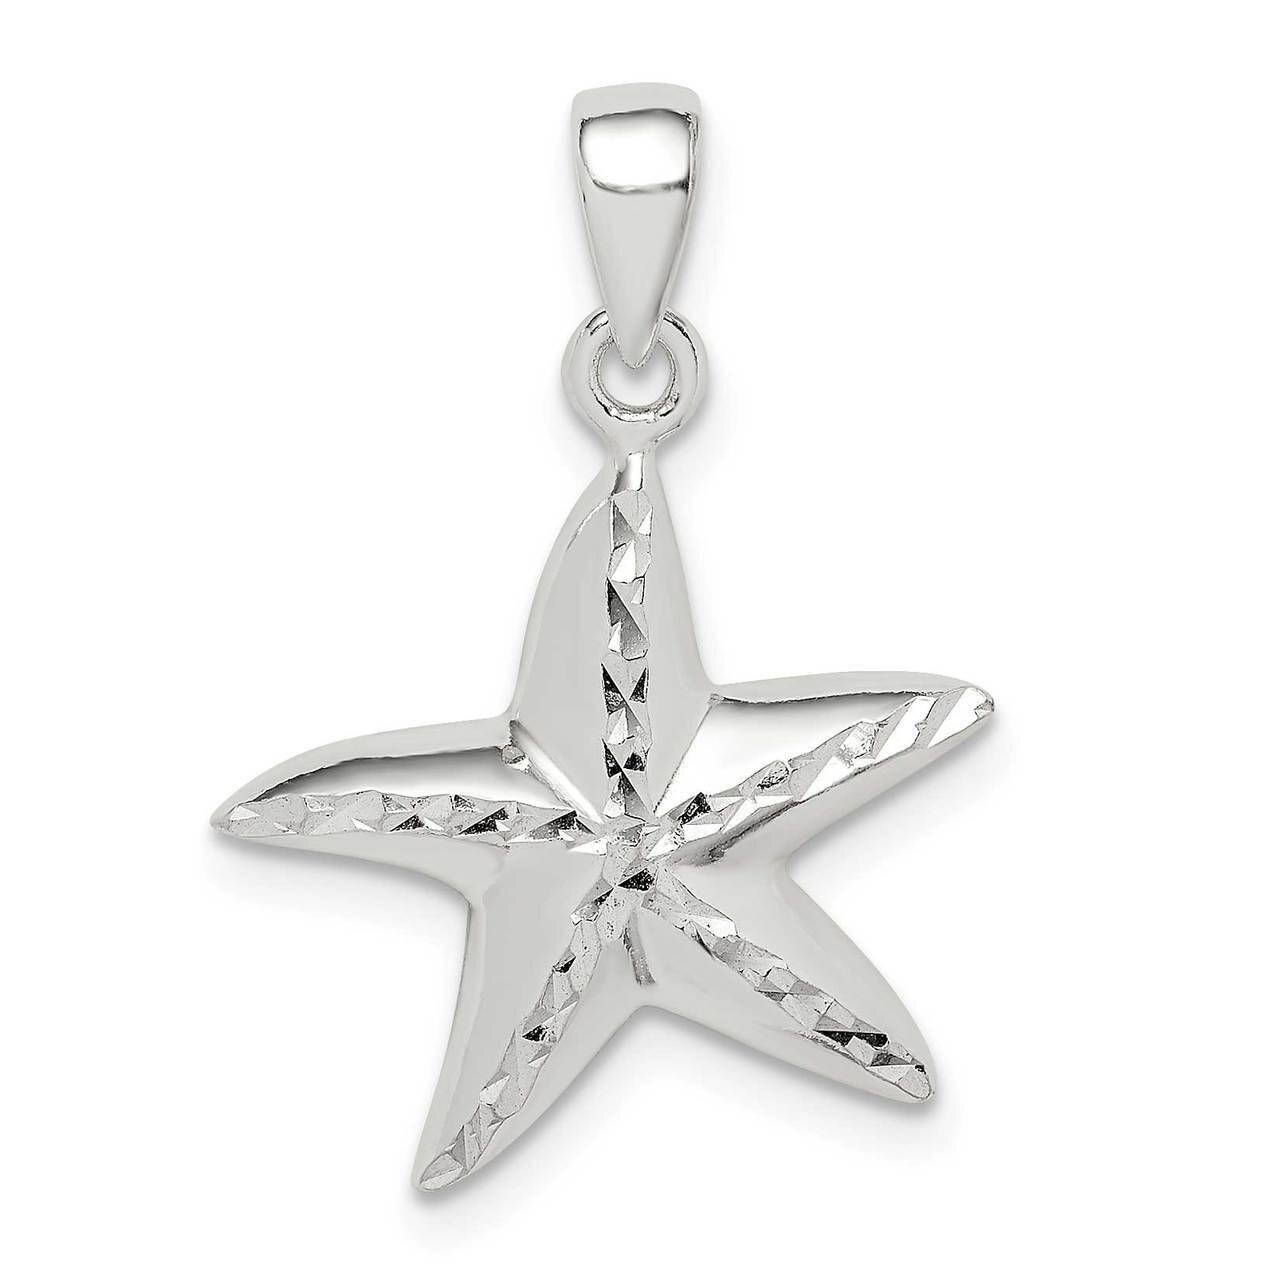 Star Fish Pendant Sterling Silver Diamond Cut QC9574